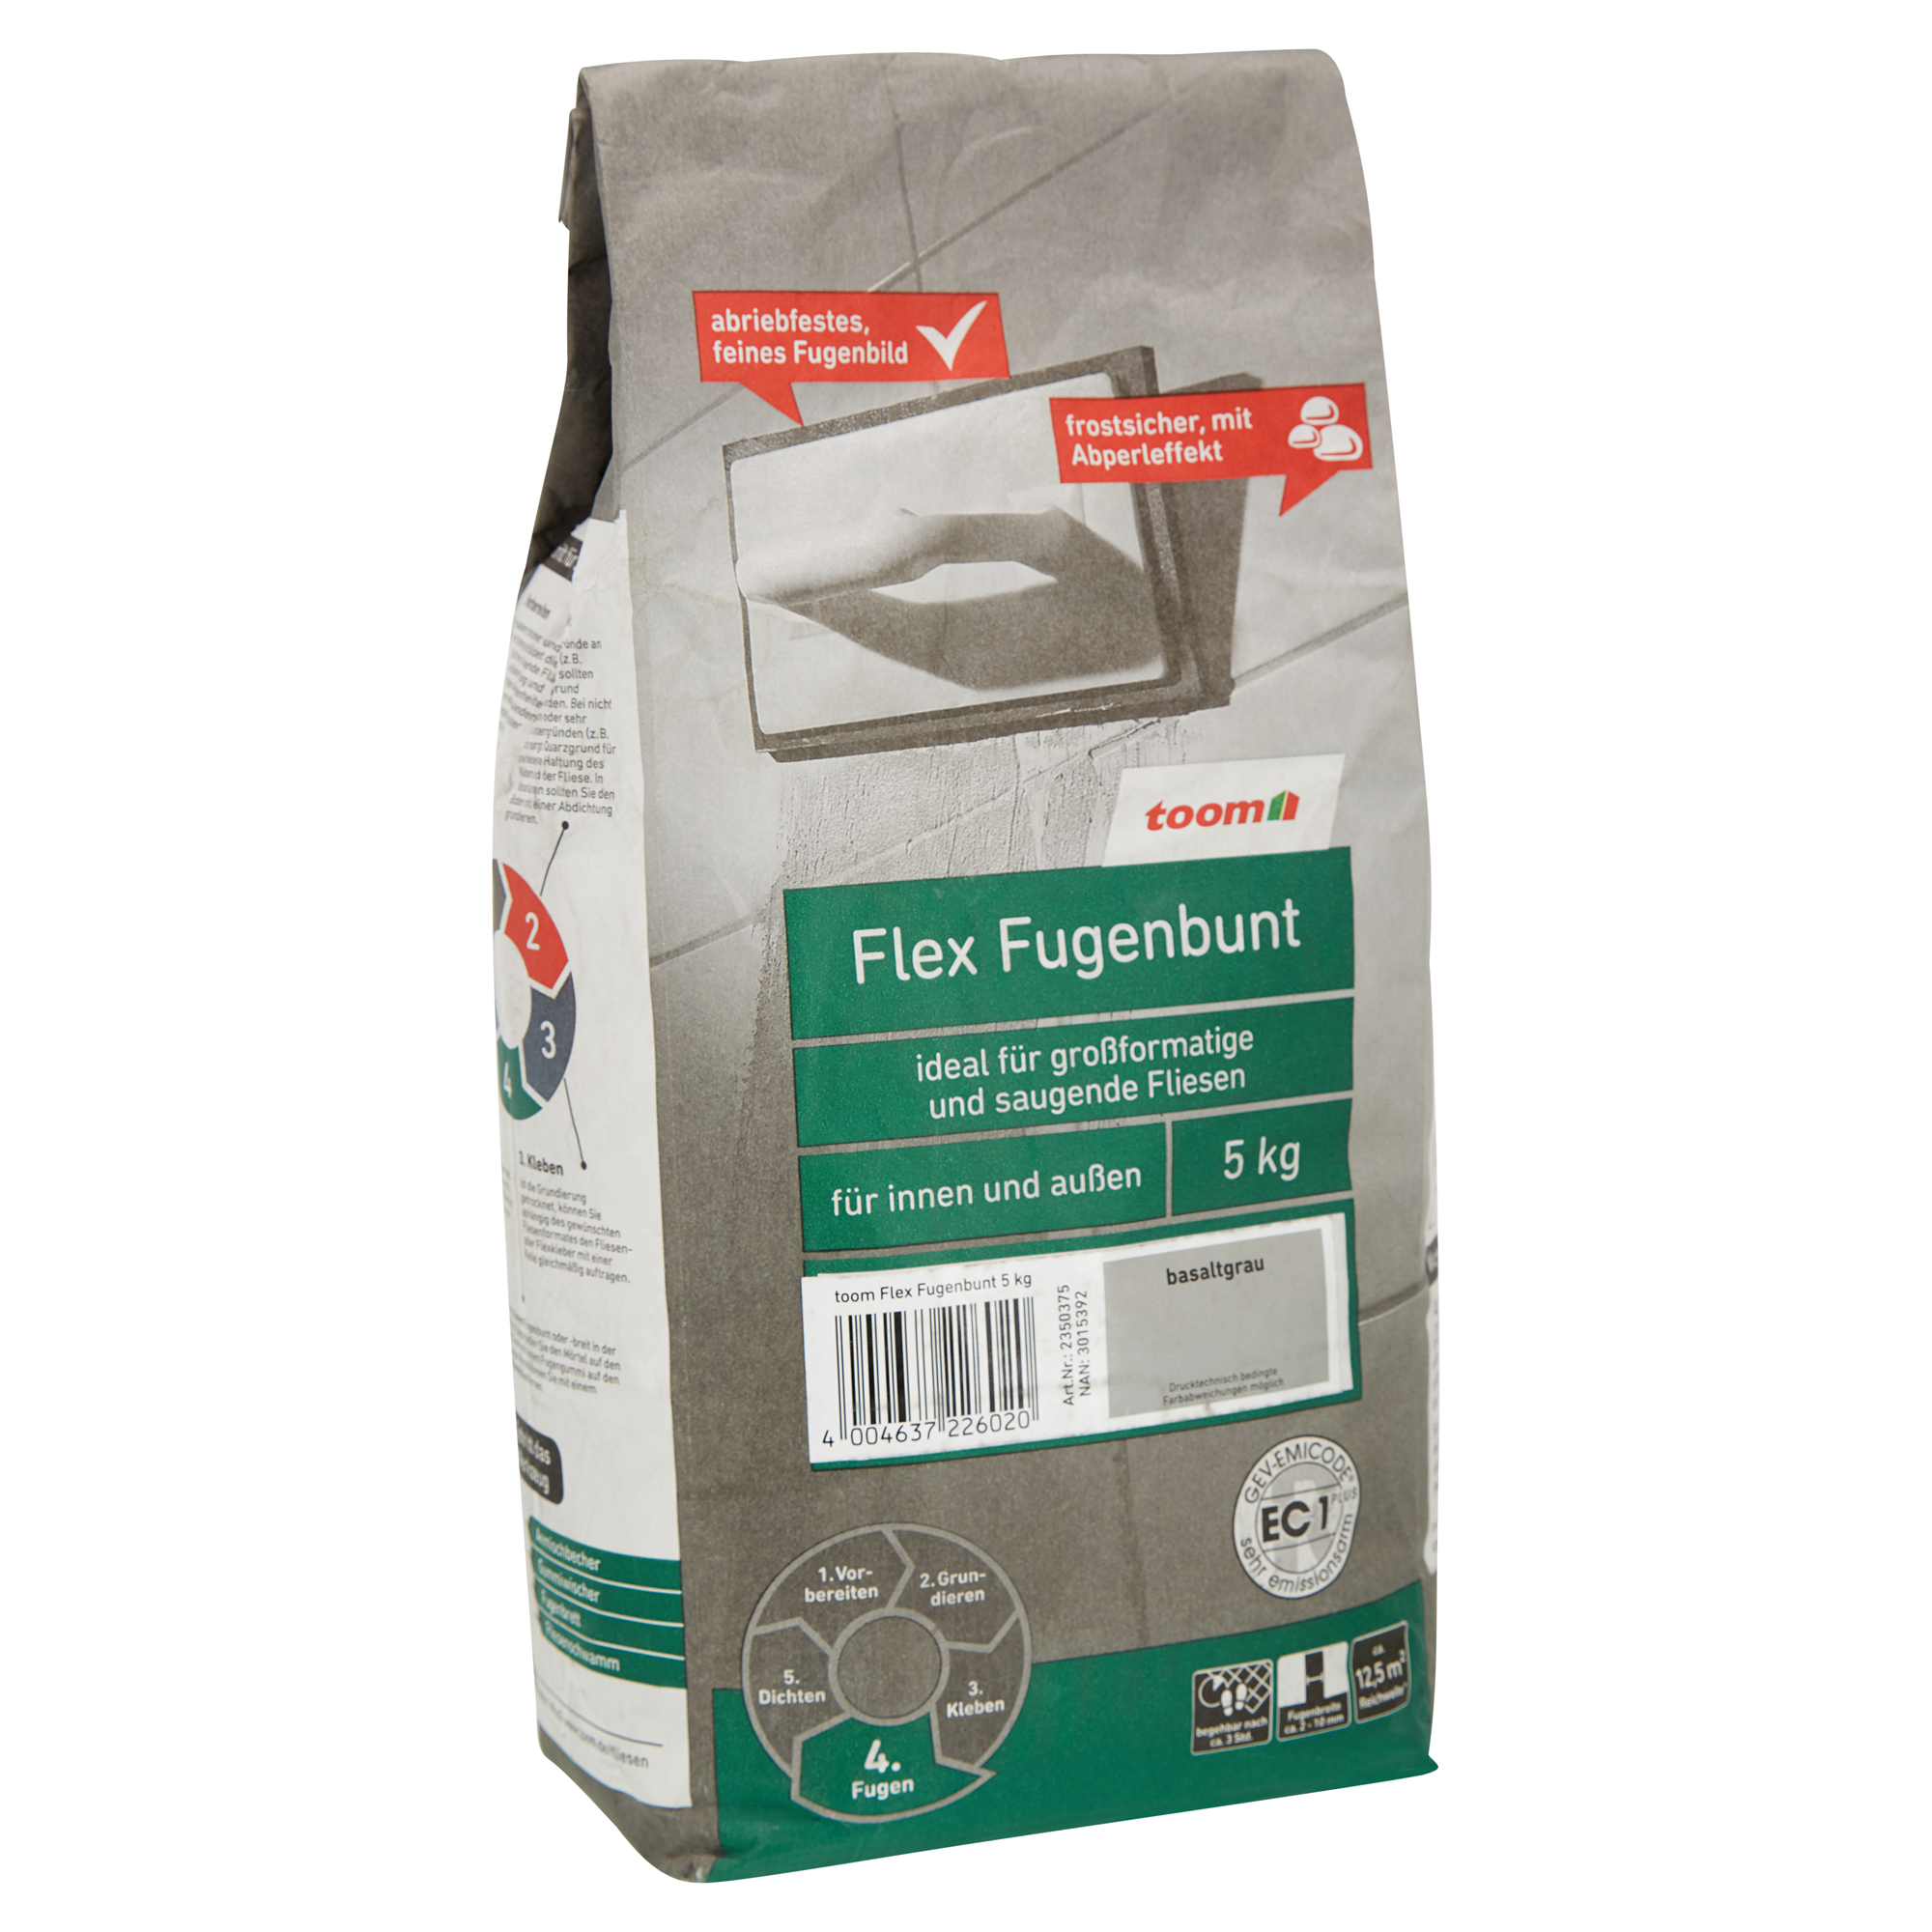 Flex-Fugenbunt basaltgrau 5 kg toom + product picture